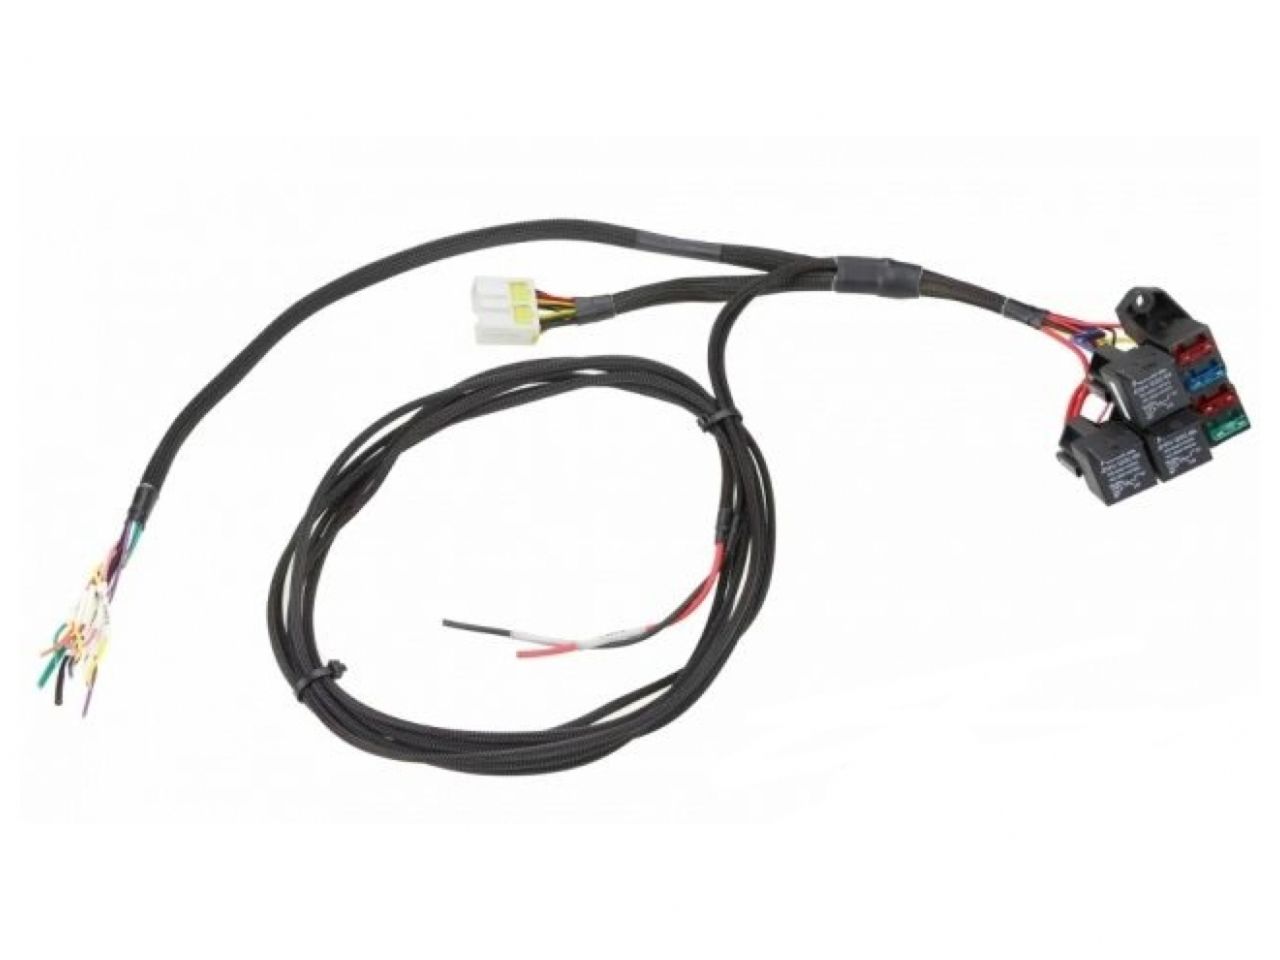 Wiring Specialties S13 SR20DET Wiring Harness for Datsun 240Z - PRO SERIES